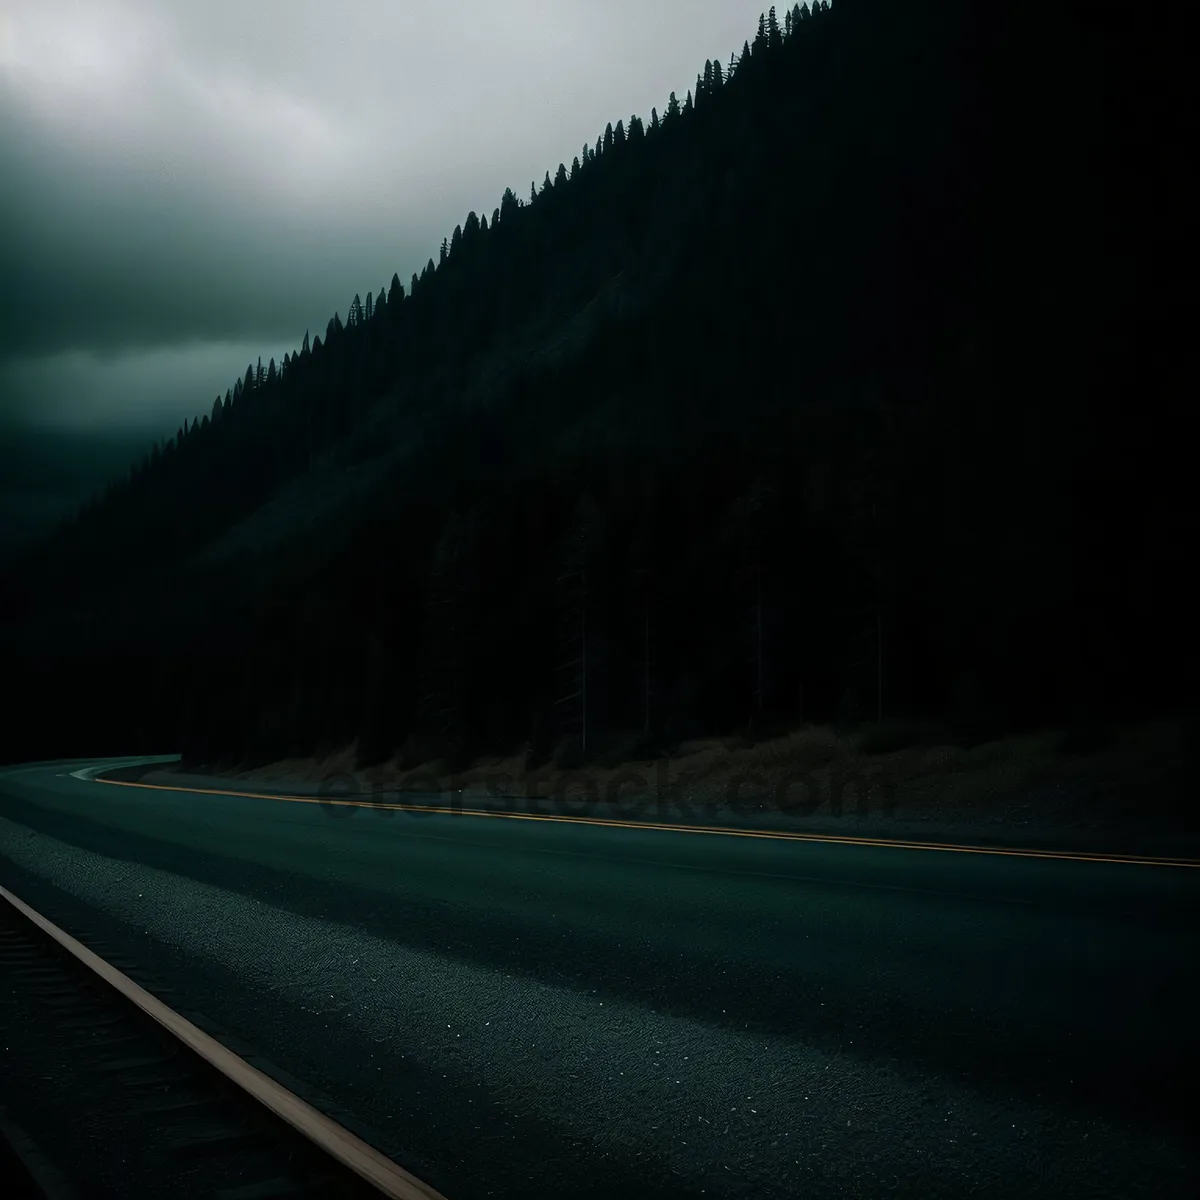 Picture of Speedscape: Highway Journey through Mountain Terrain